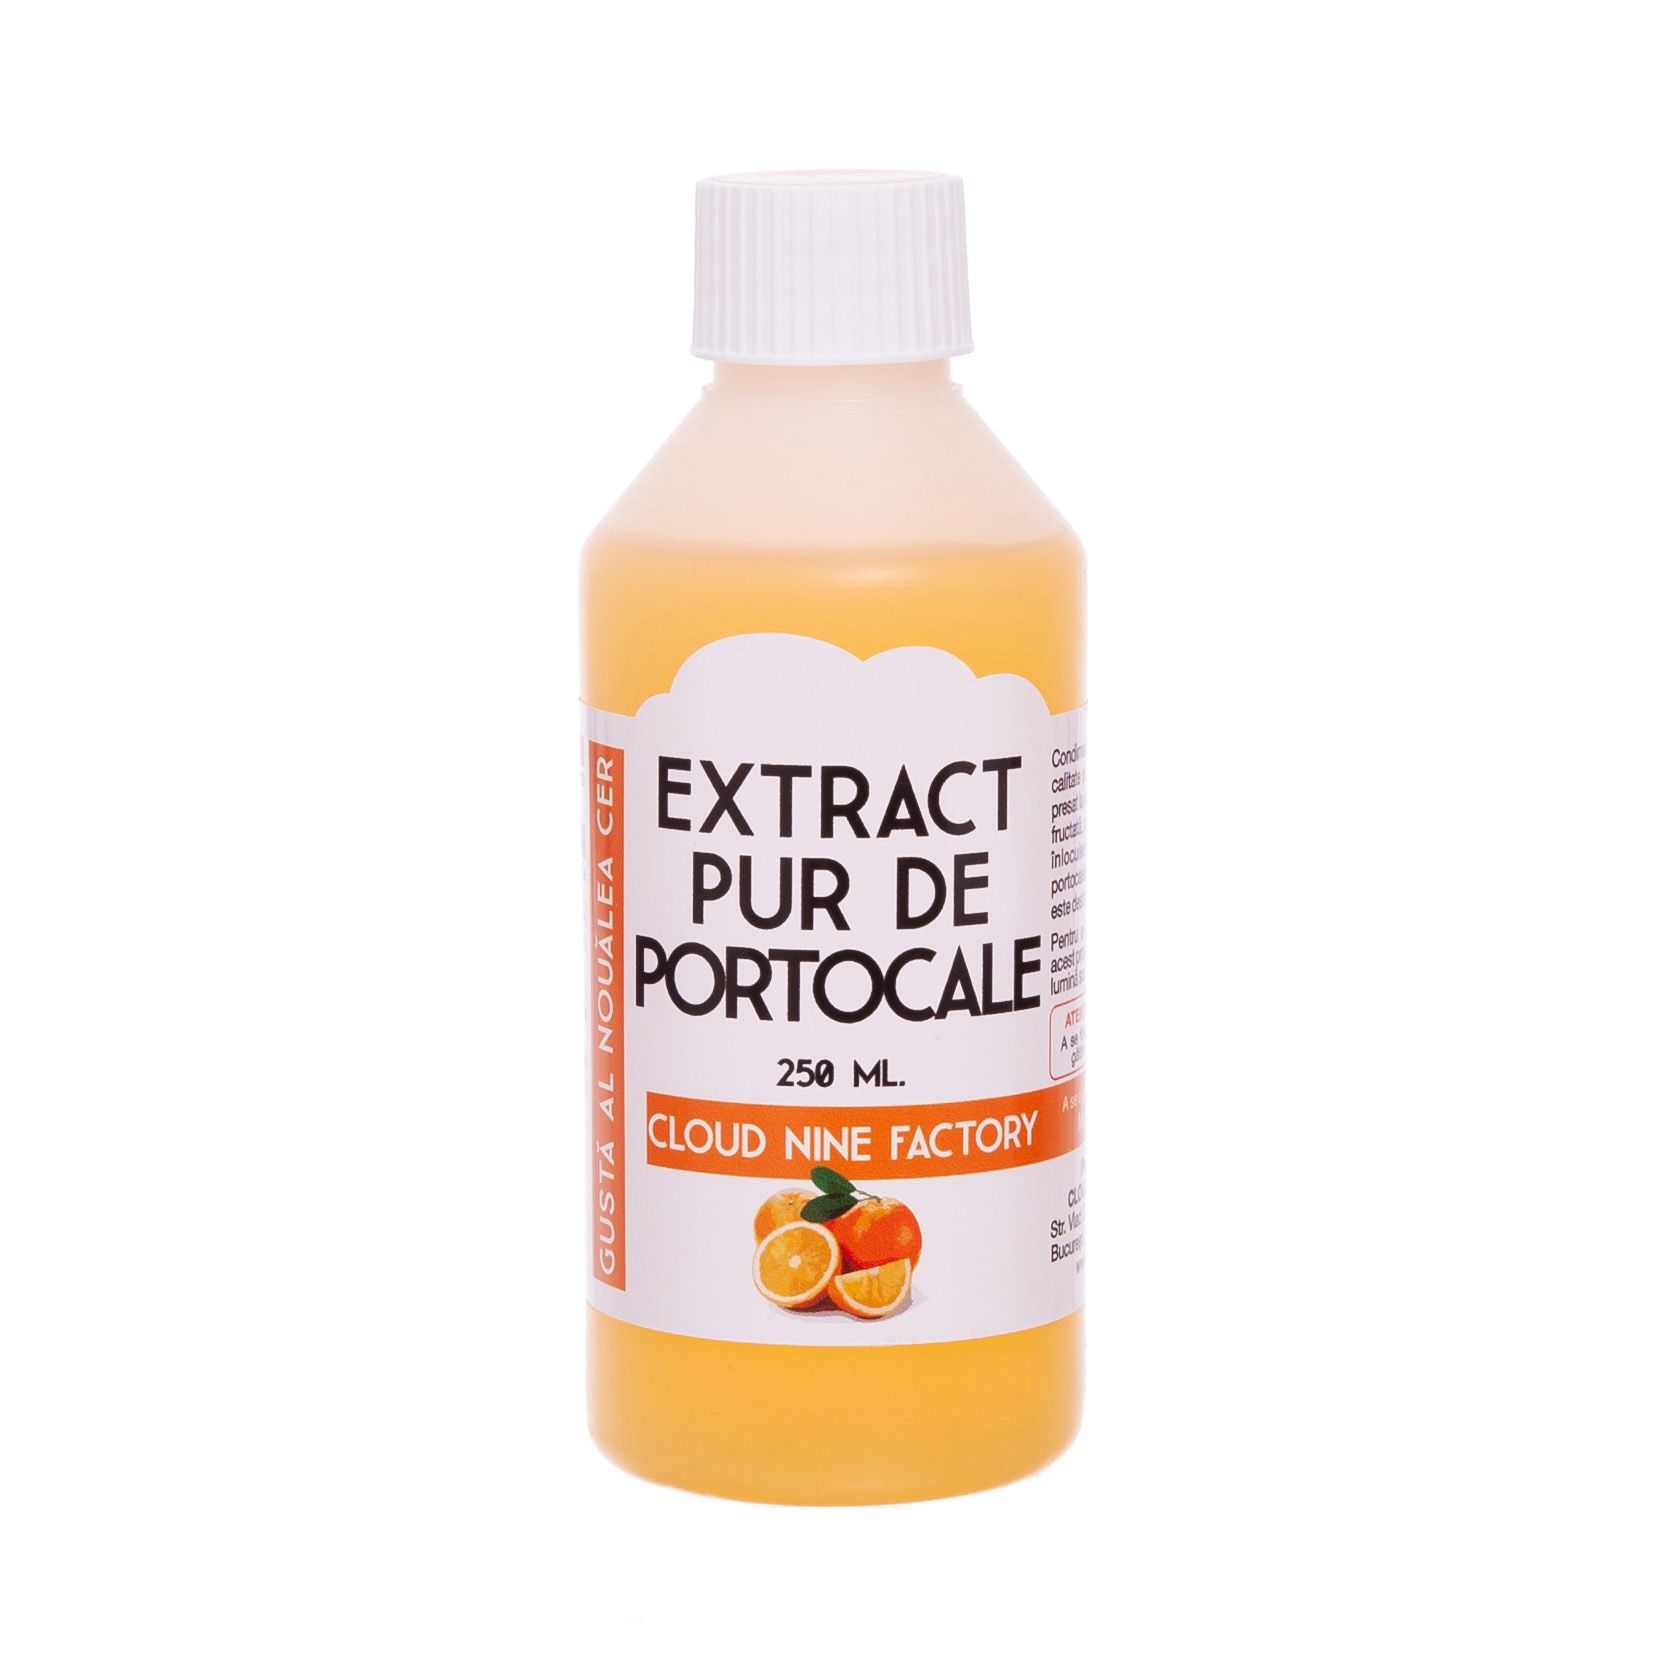 Extract Pur de Portocale (250 ml.) extract pur de portocale (250 ml.) - IMG 2628 - Extract Pur de Portocale (250 ml.) magazin online - IMG 2628 - Cloud Nine Factory™ ⛅ Magazin online